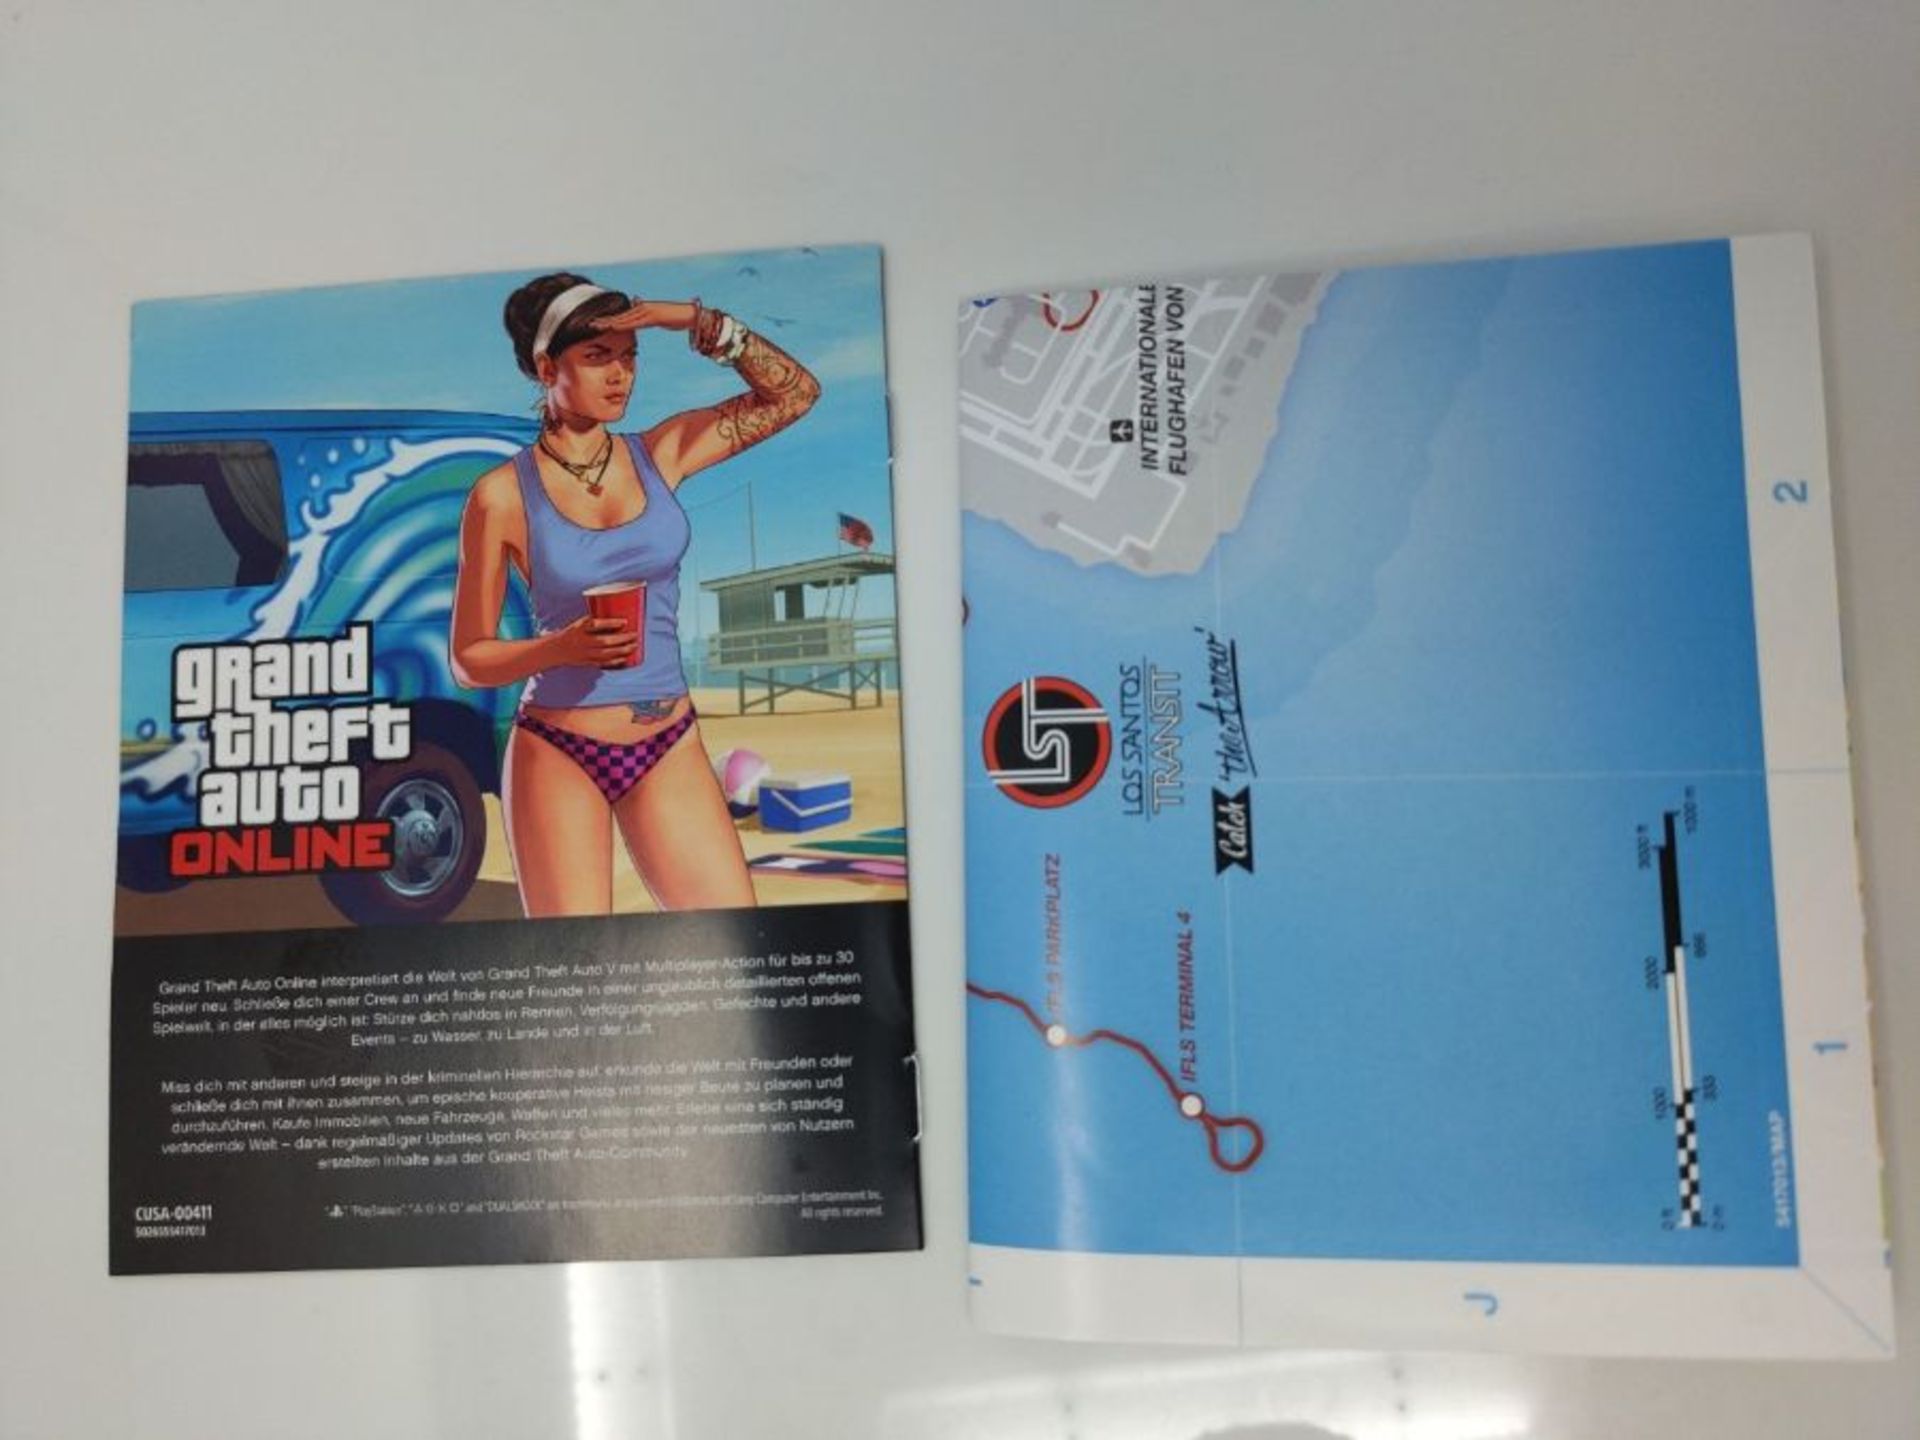 Grand Theft Auto V (Premium Edition) - Image 3 of 3